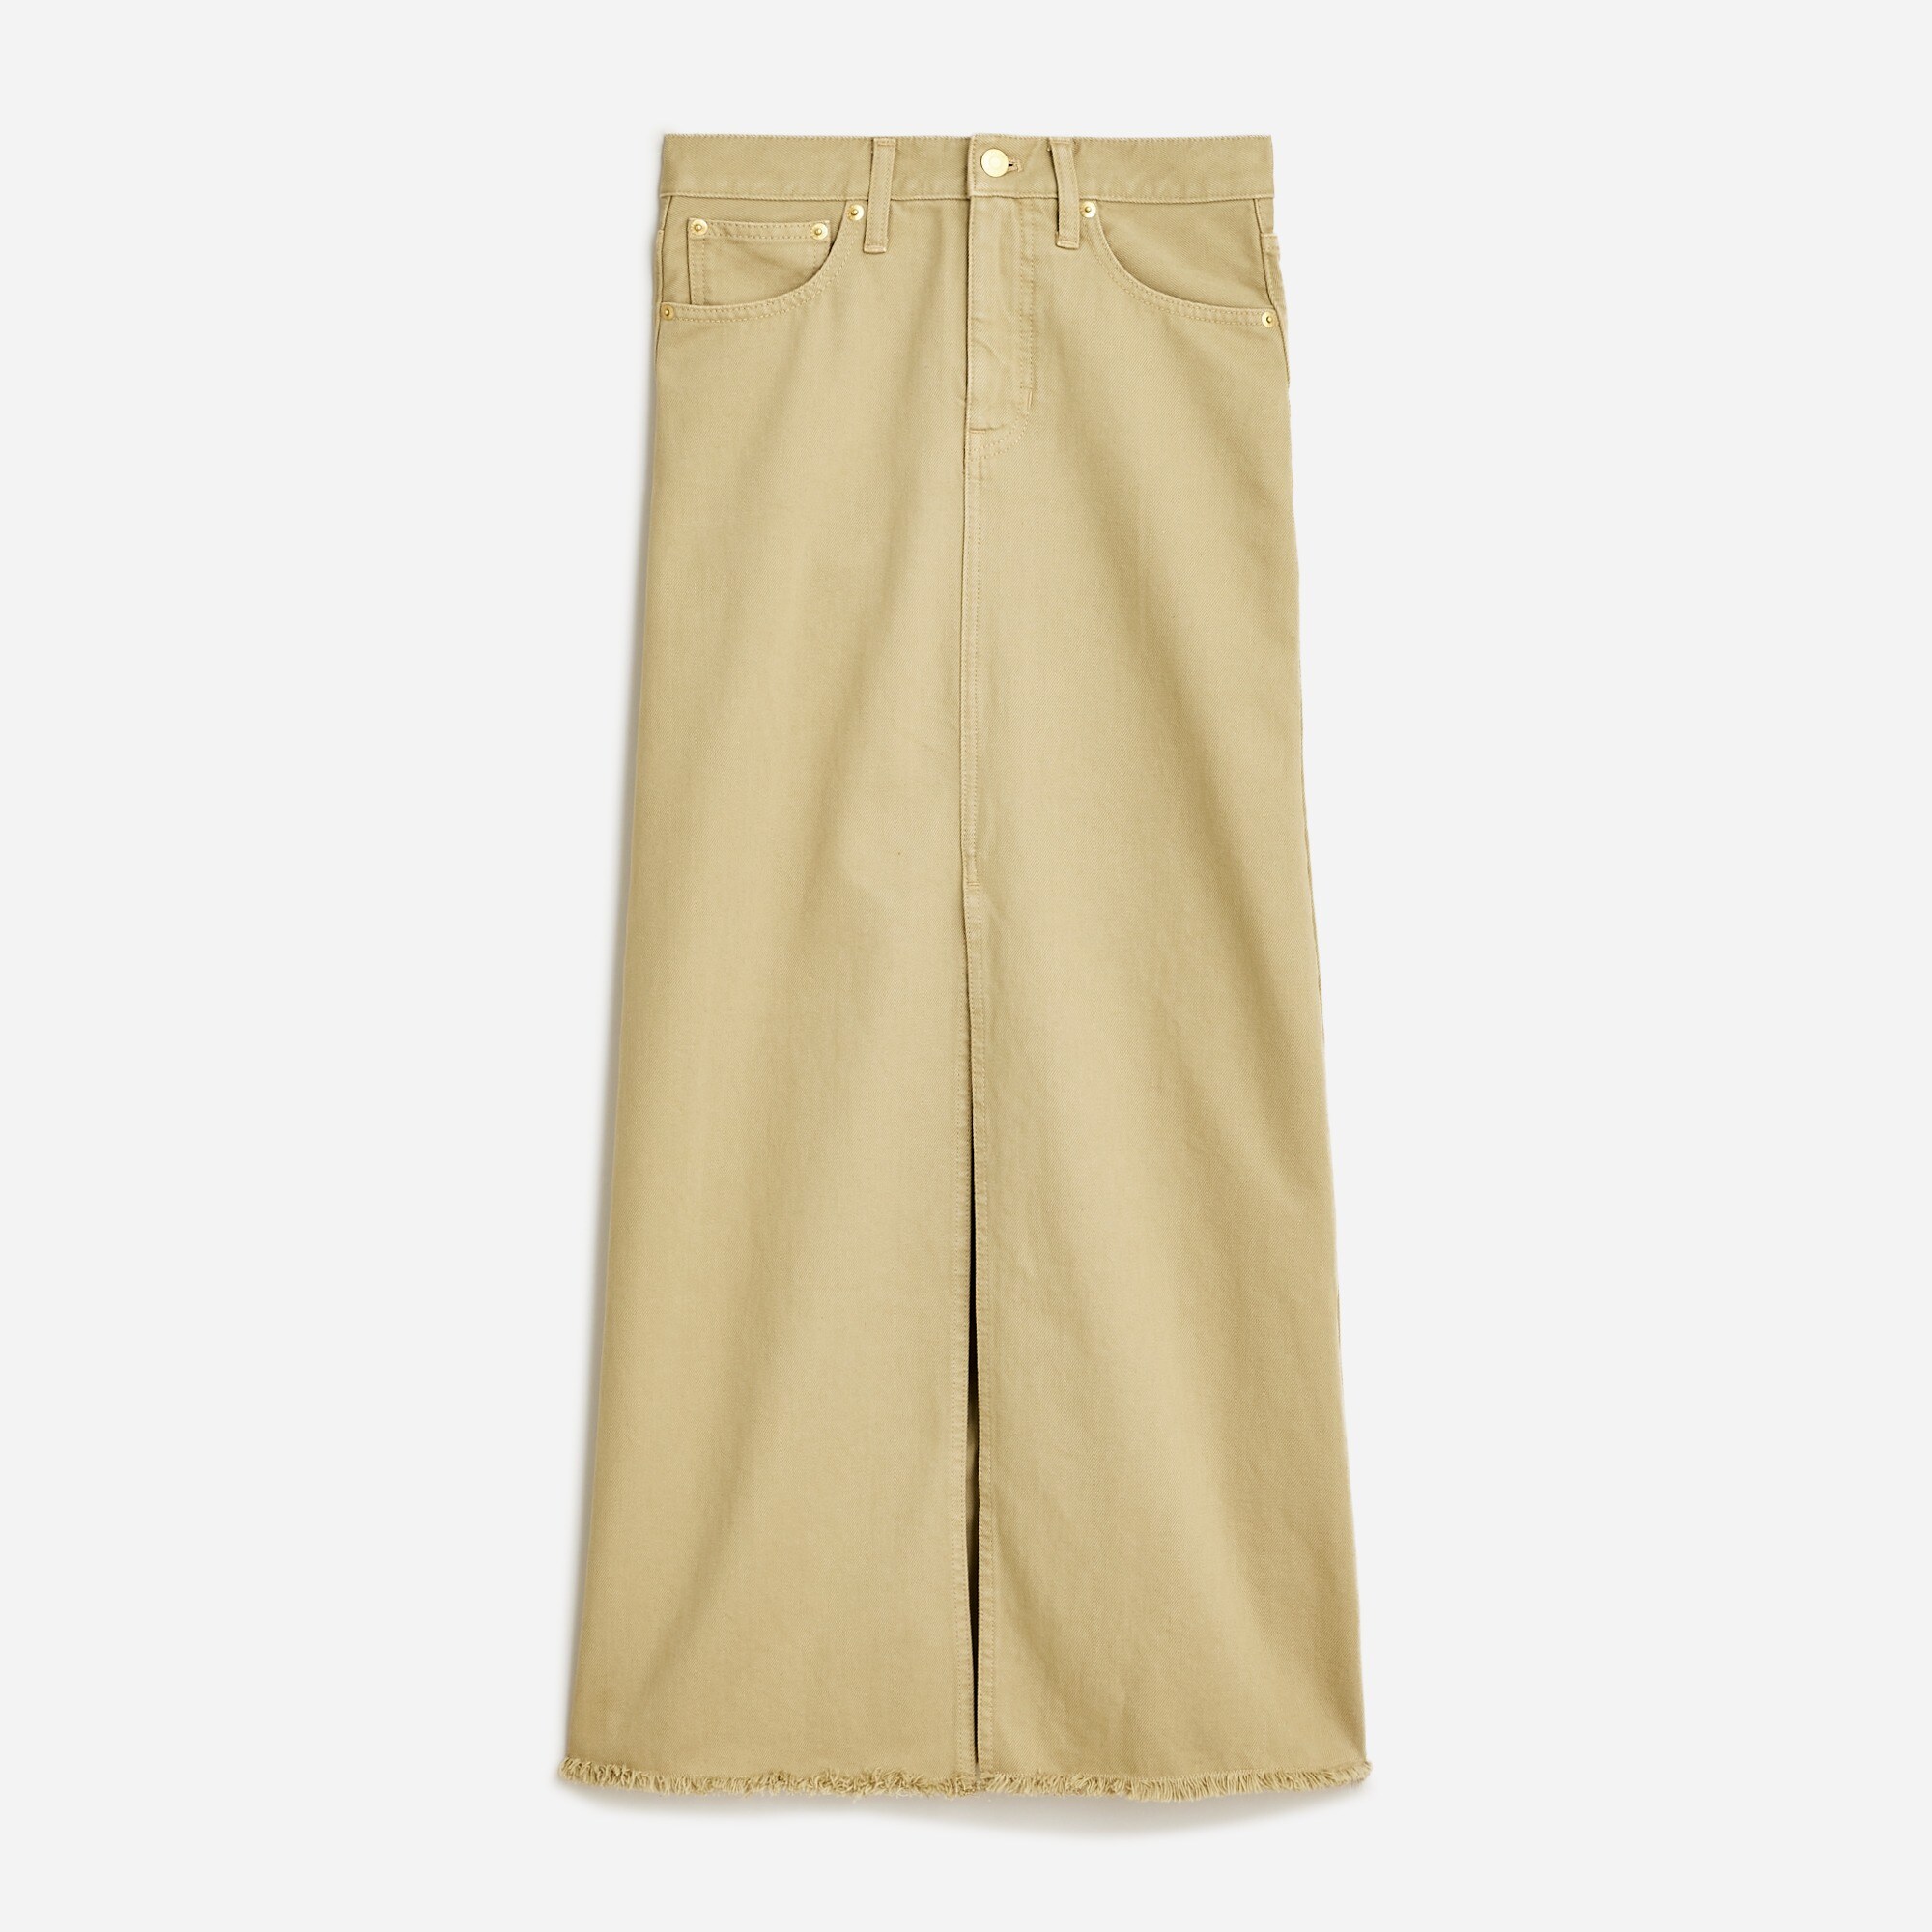  Classic denim maxi skirt in khaki